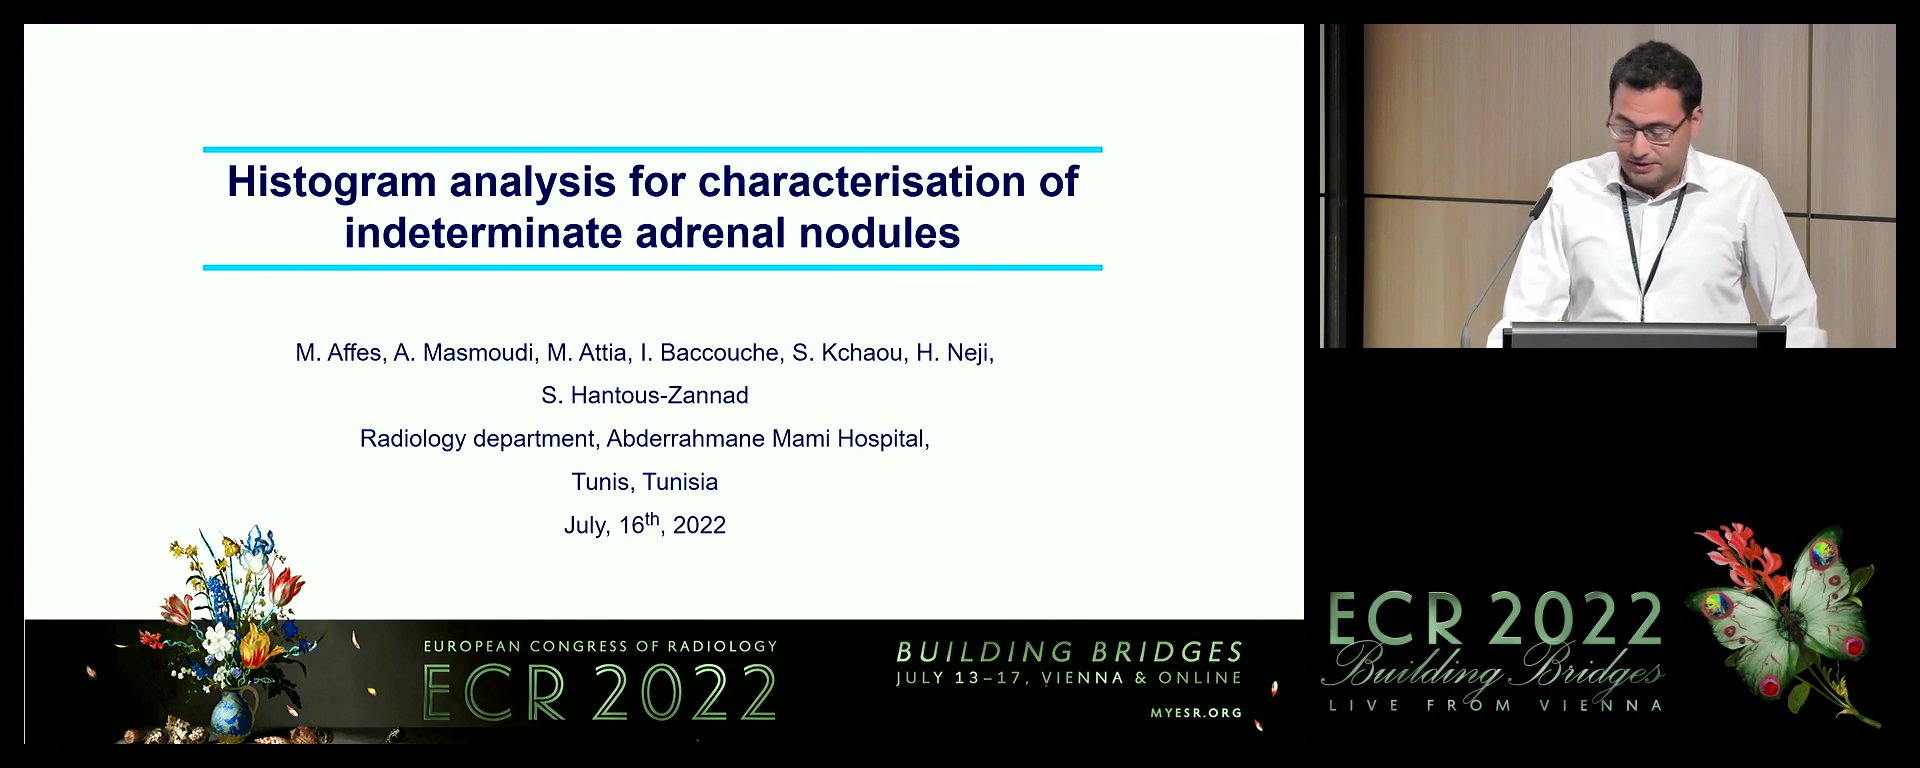 Histogram analysis for characterisation of indeterminate adrenal nodules - Abdellatif Masmoudi, tunis / TN